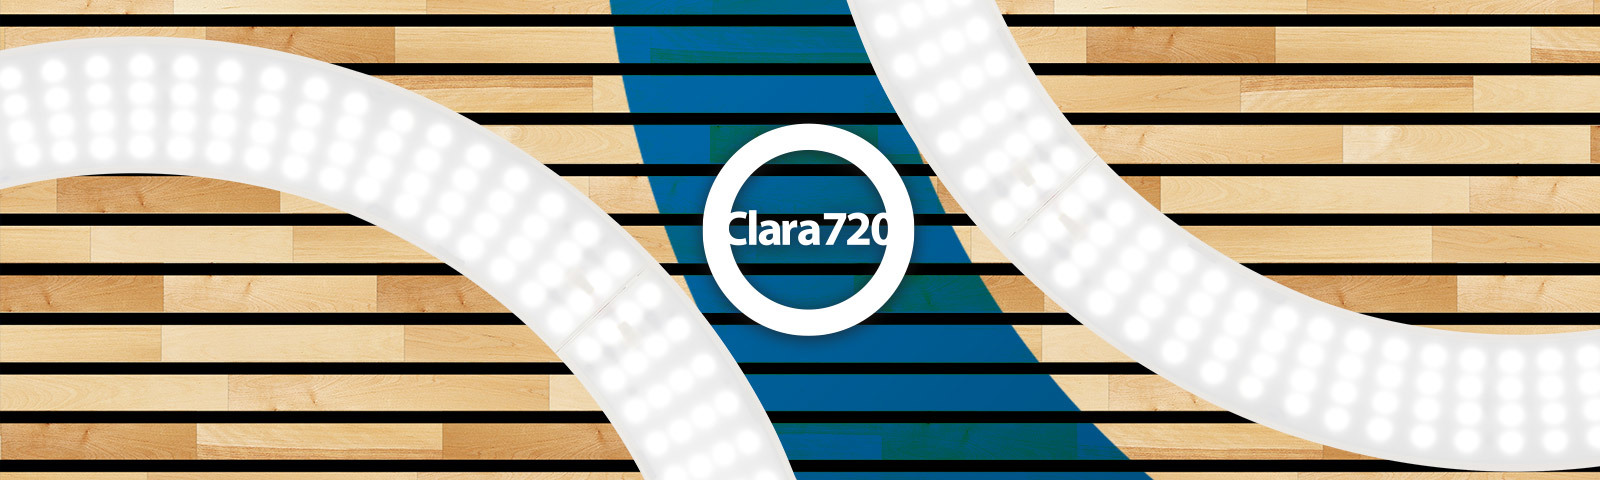 Clara 720